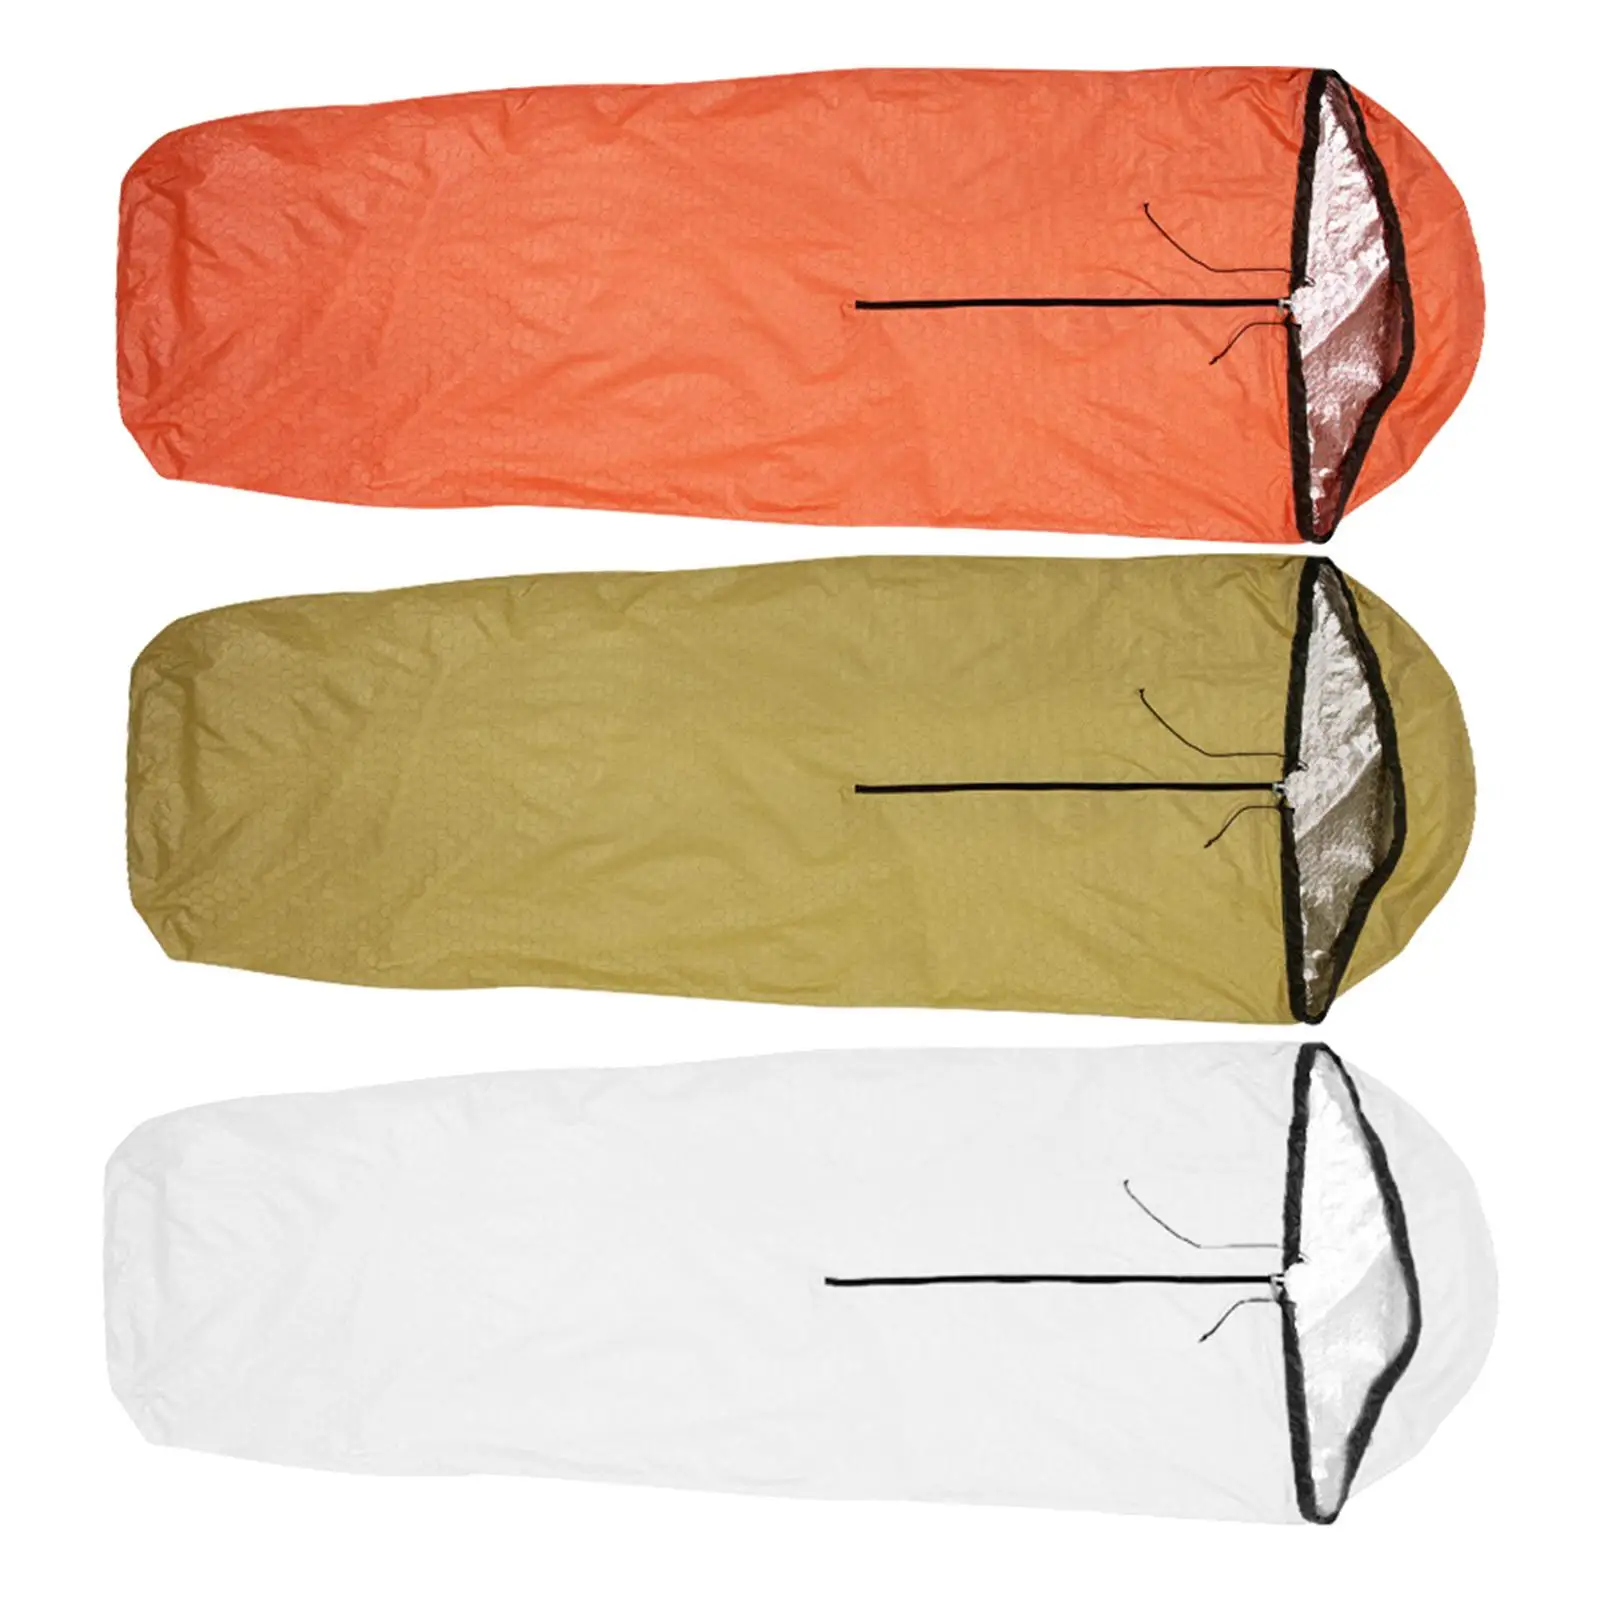 Emergency Sleeping Bag Thermal Liner for Outdoor Survival Activities Travel